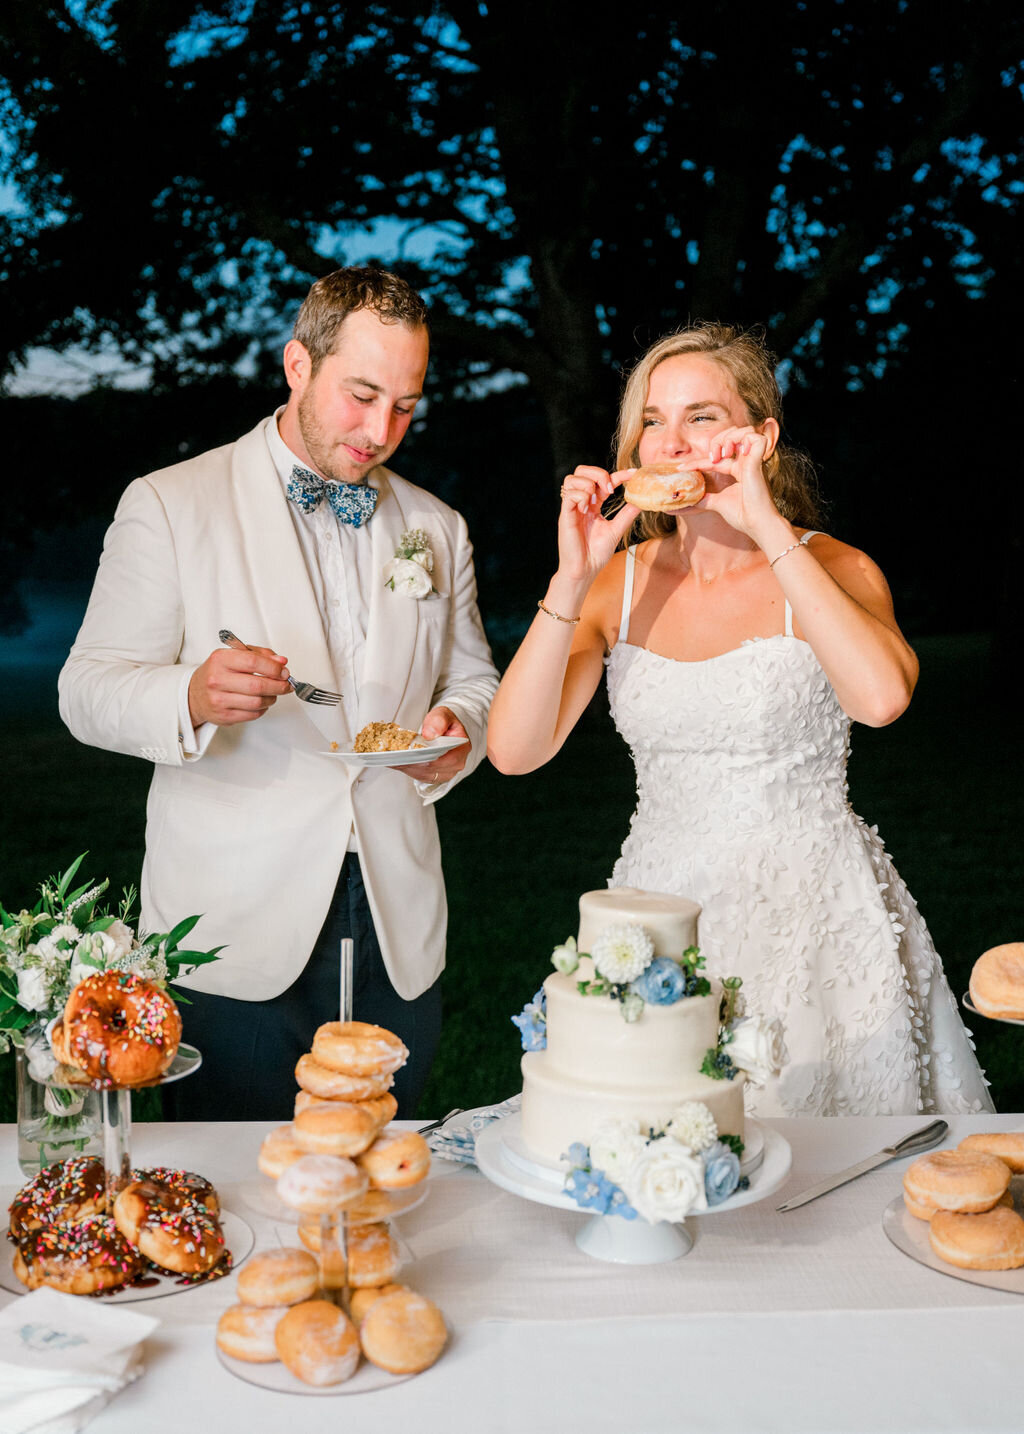 michelle-dunham-photography-cape-cod-wedding-photographer-orleans-smith-estate-tent-reception-cake-cutting-6